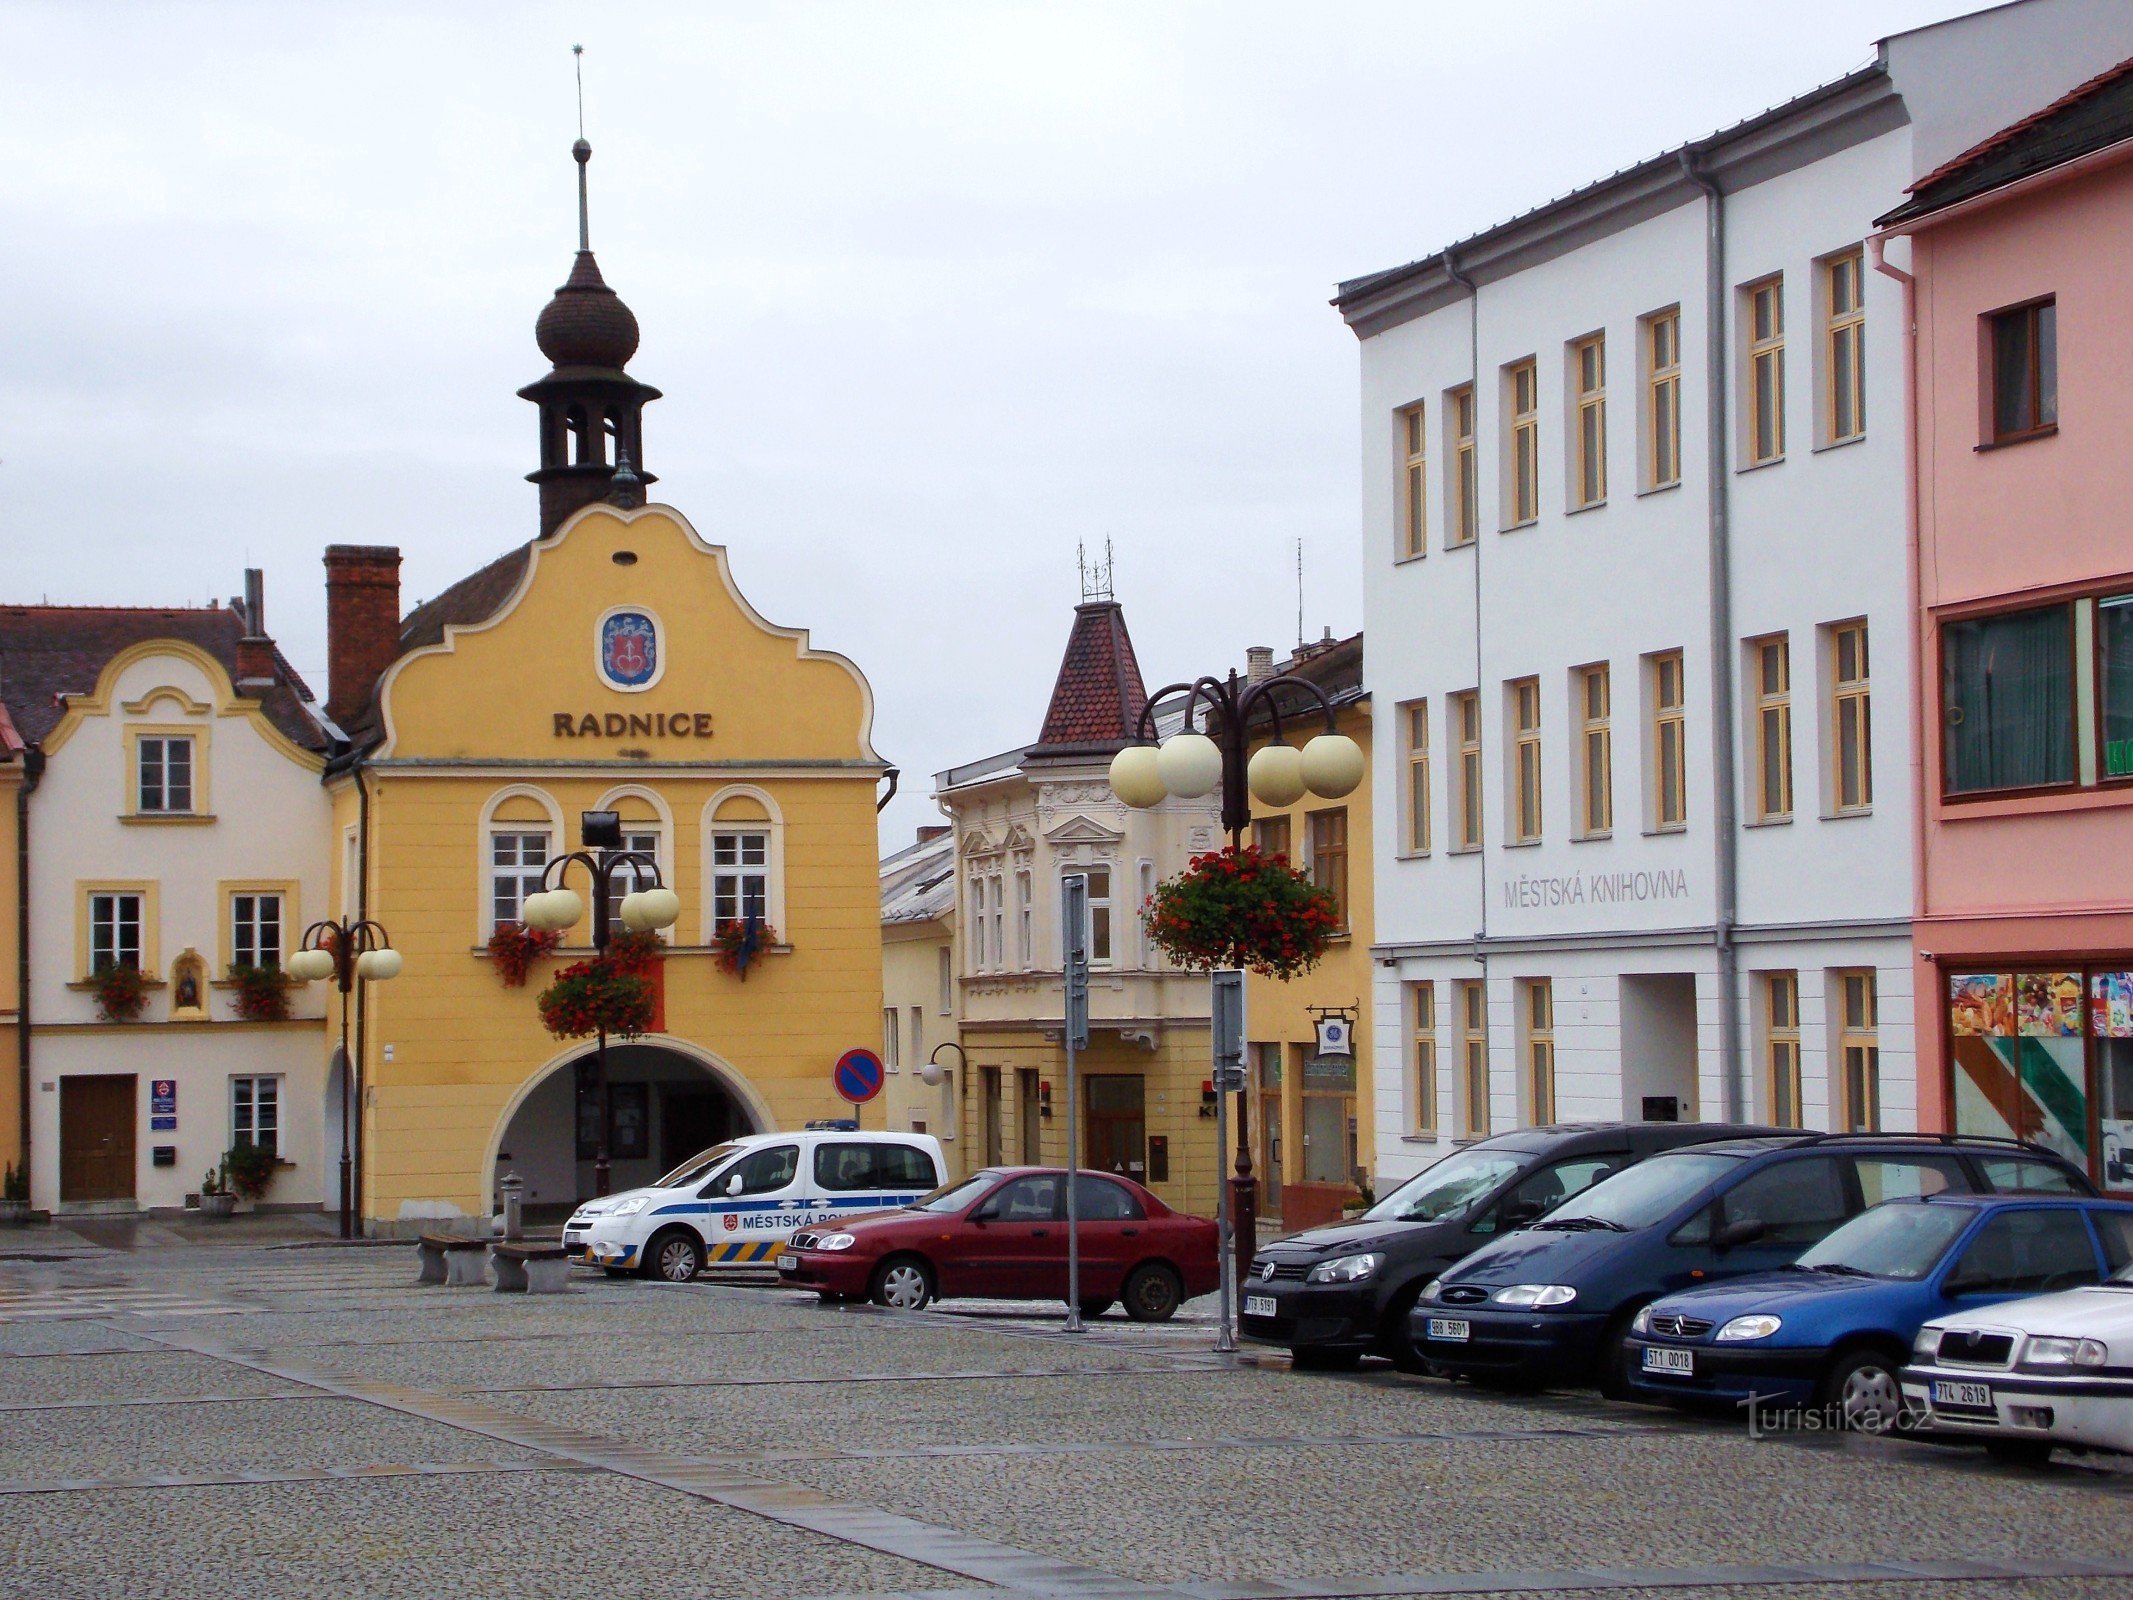 Renaissance town hall in Bílovec